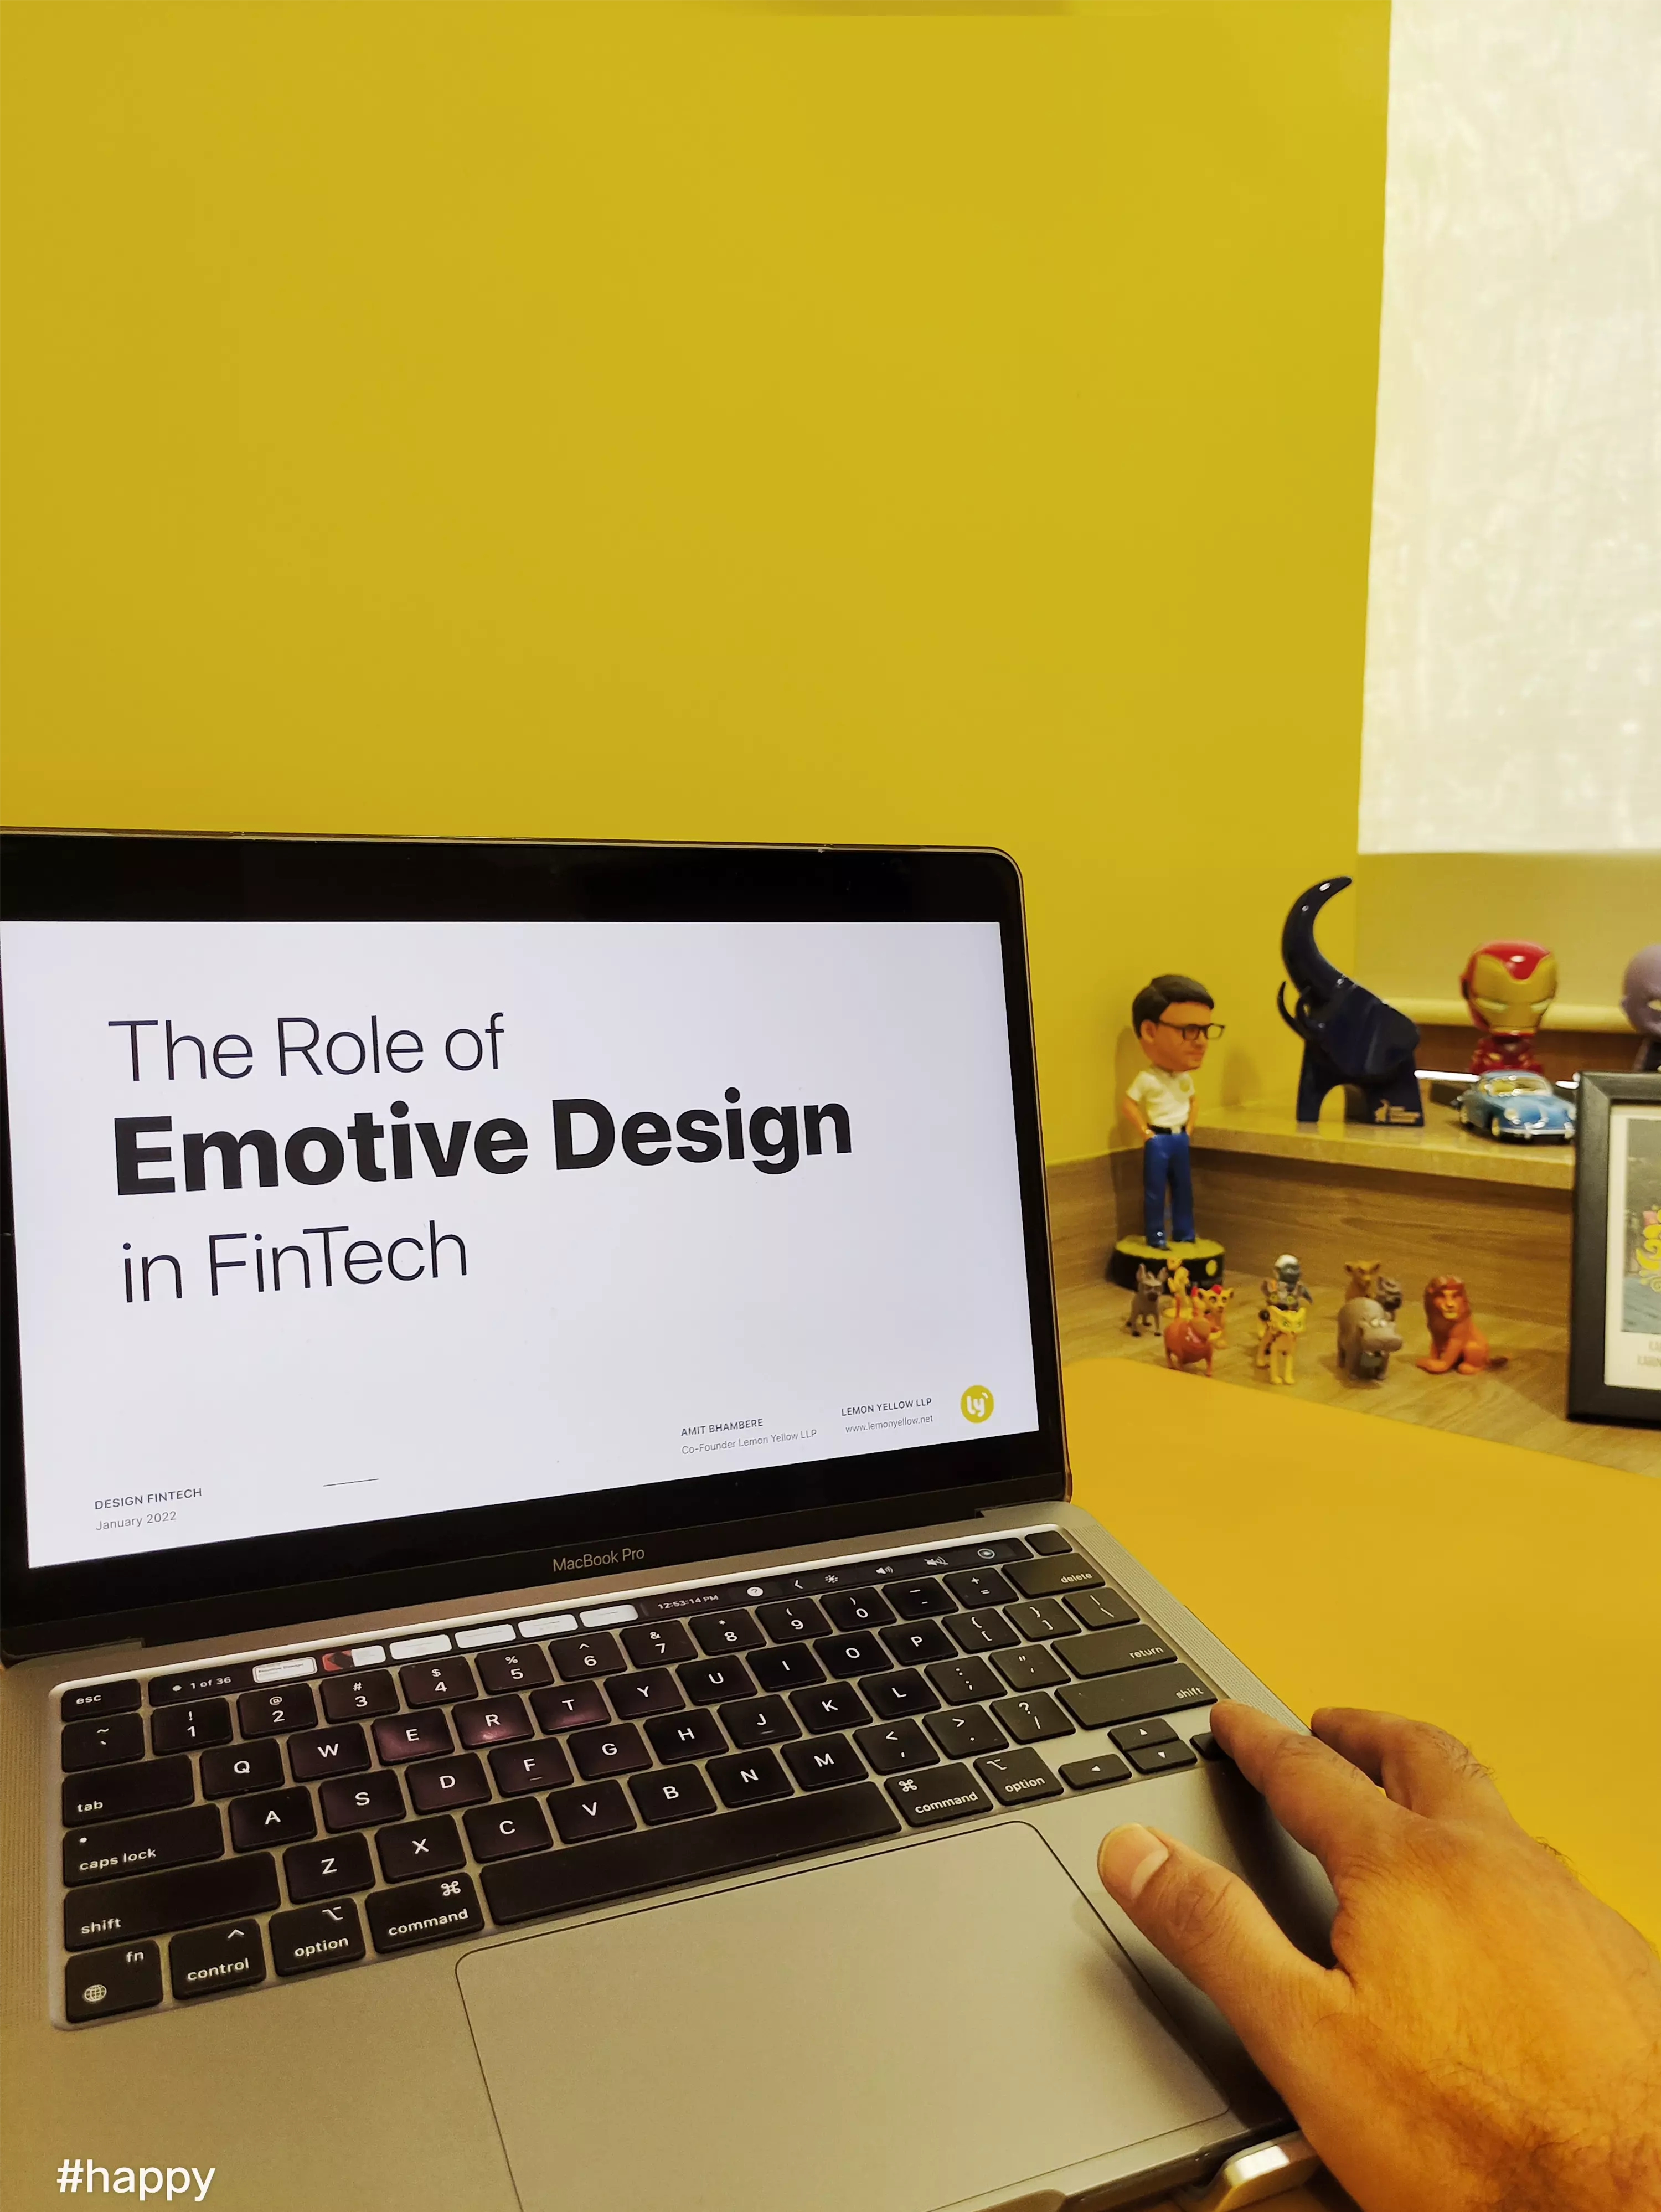 The role of emotive design presentation at FinTech Festival India